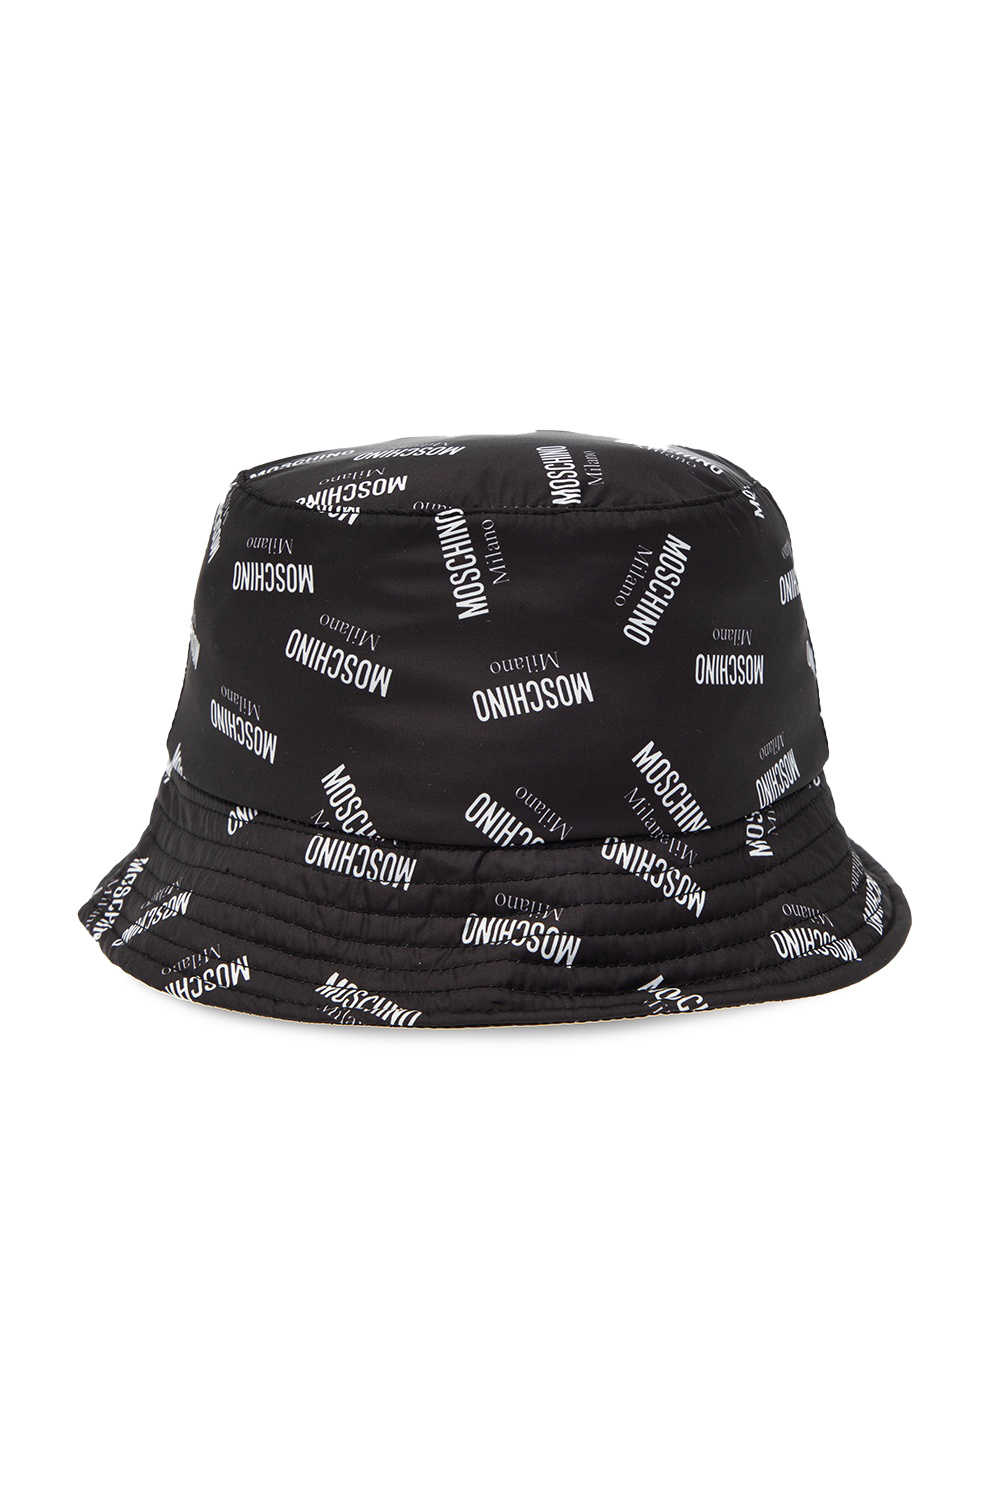 Black Hat with logo Moschino - Vitkac Canada